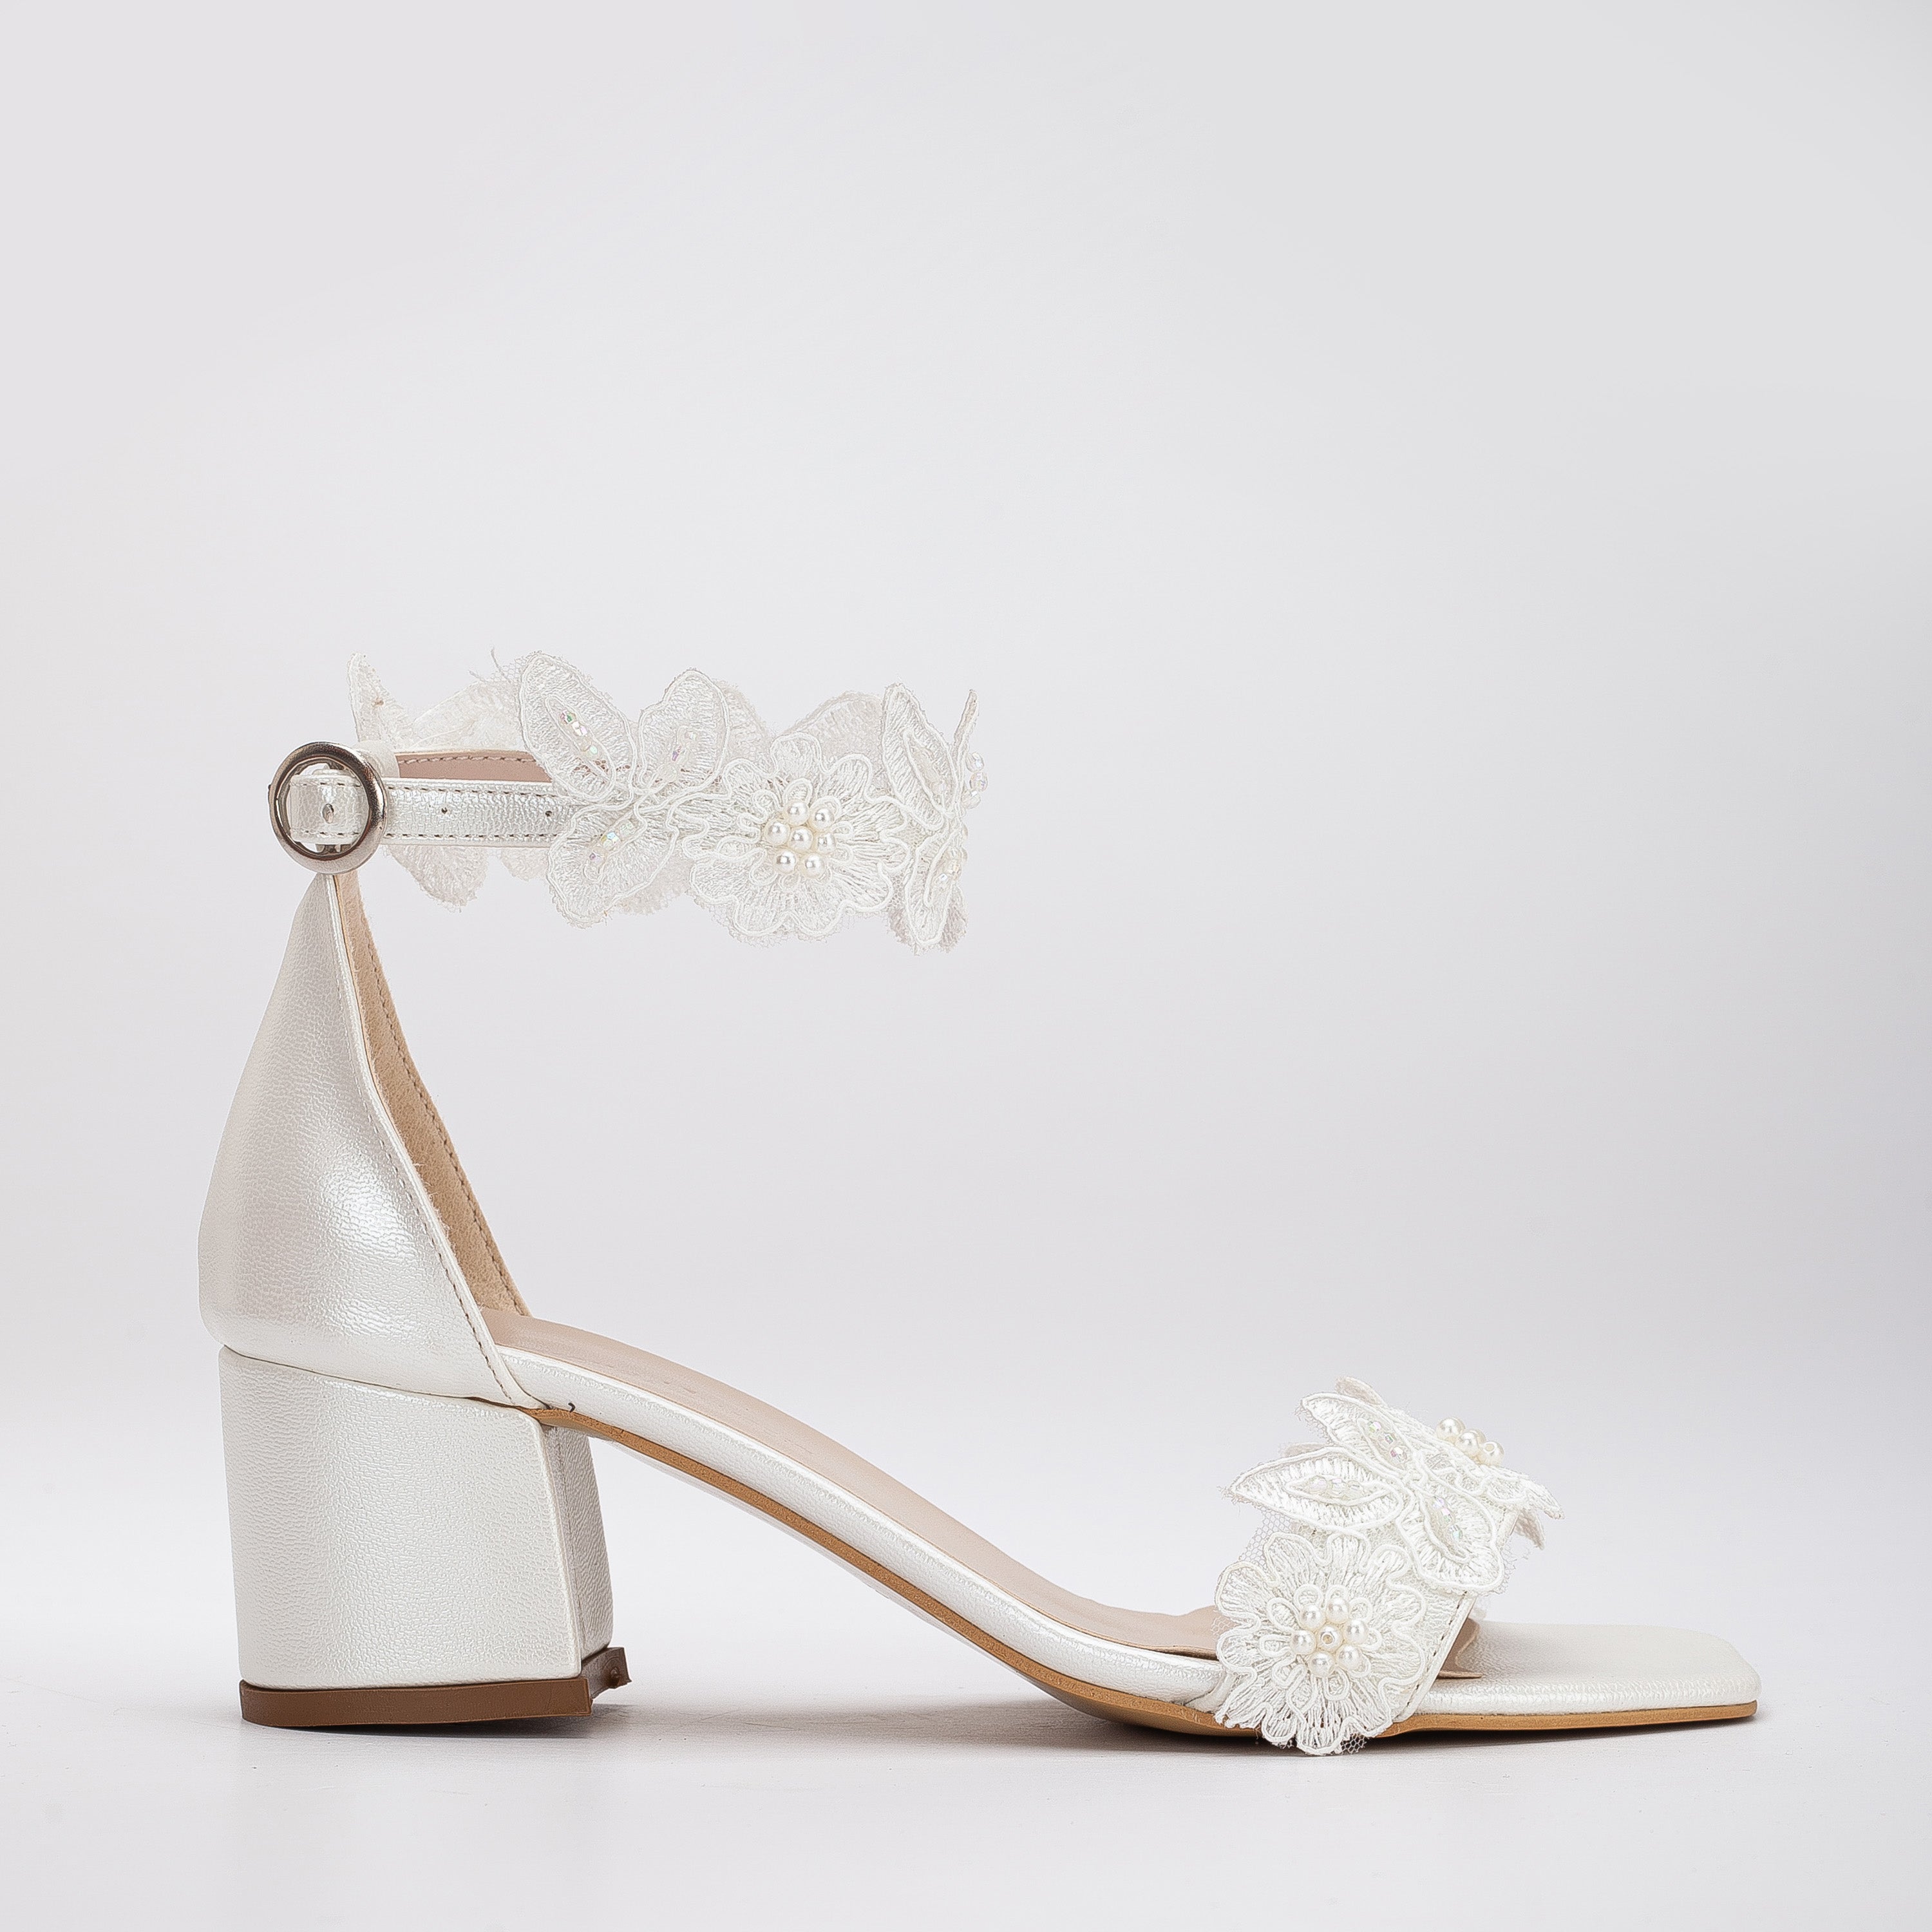 White Lace Wedding Shoes, White Heels, White Bride Shoes, Wedding Shoes, White Low Heel Sandals